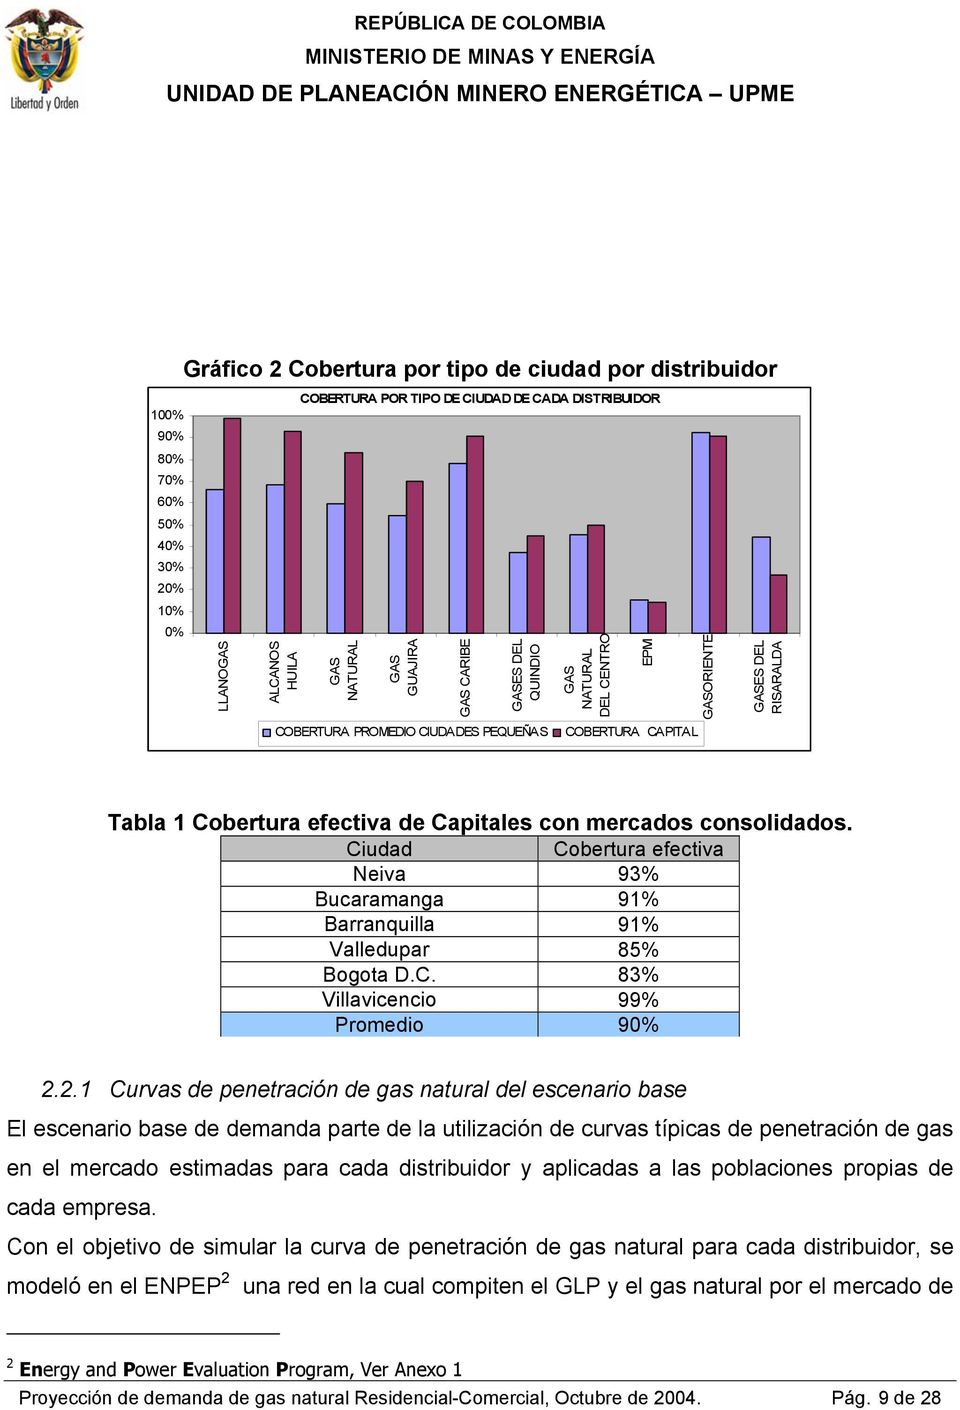 consolidados. Ciudad Cobertura efectiva Neiva 93% Bucaramanga 91% Barranquilla 91% Valledupar 85% Bogota D.C. 83% Villavicencio 99% Promedio 90% 2.